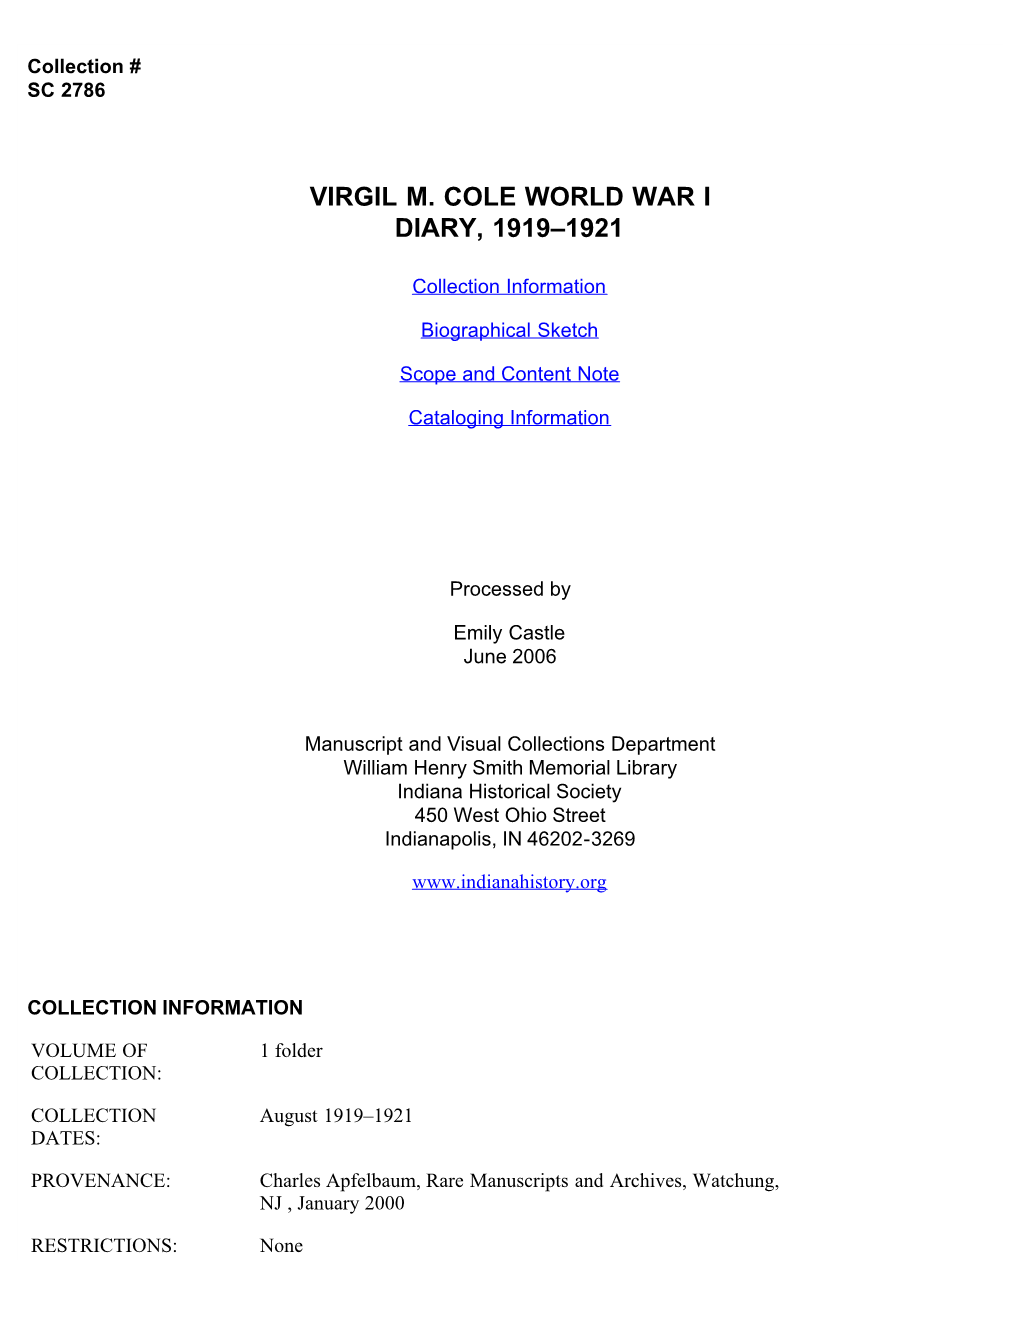 Virgil M. Cole World War I Diary, 1919-1921